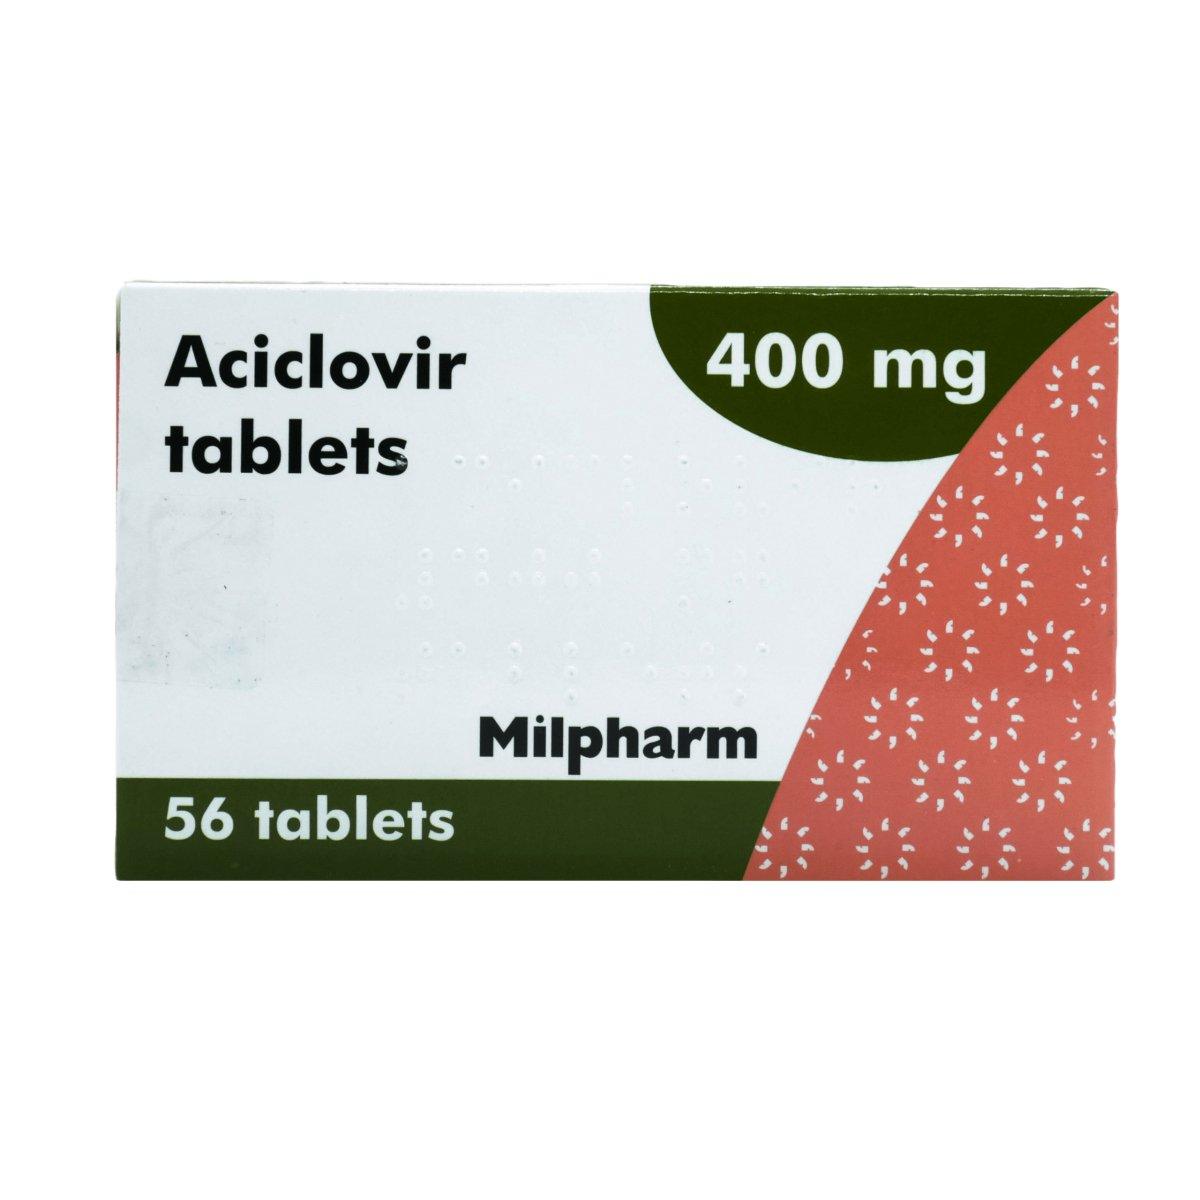 Aciclovir 400mg tablets - Rightangled